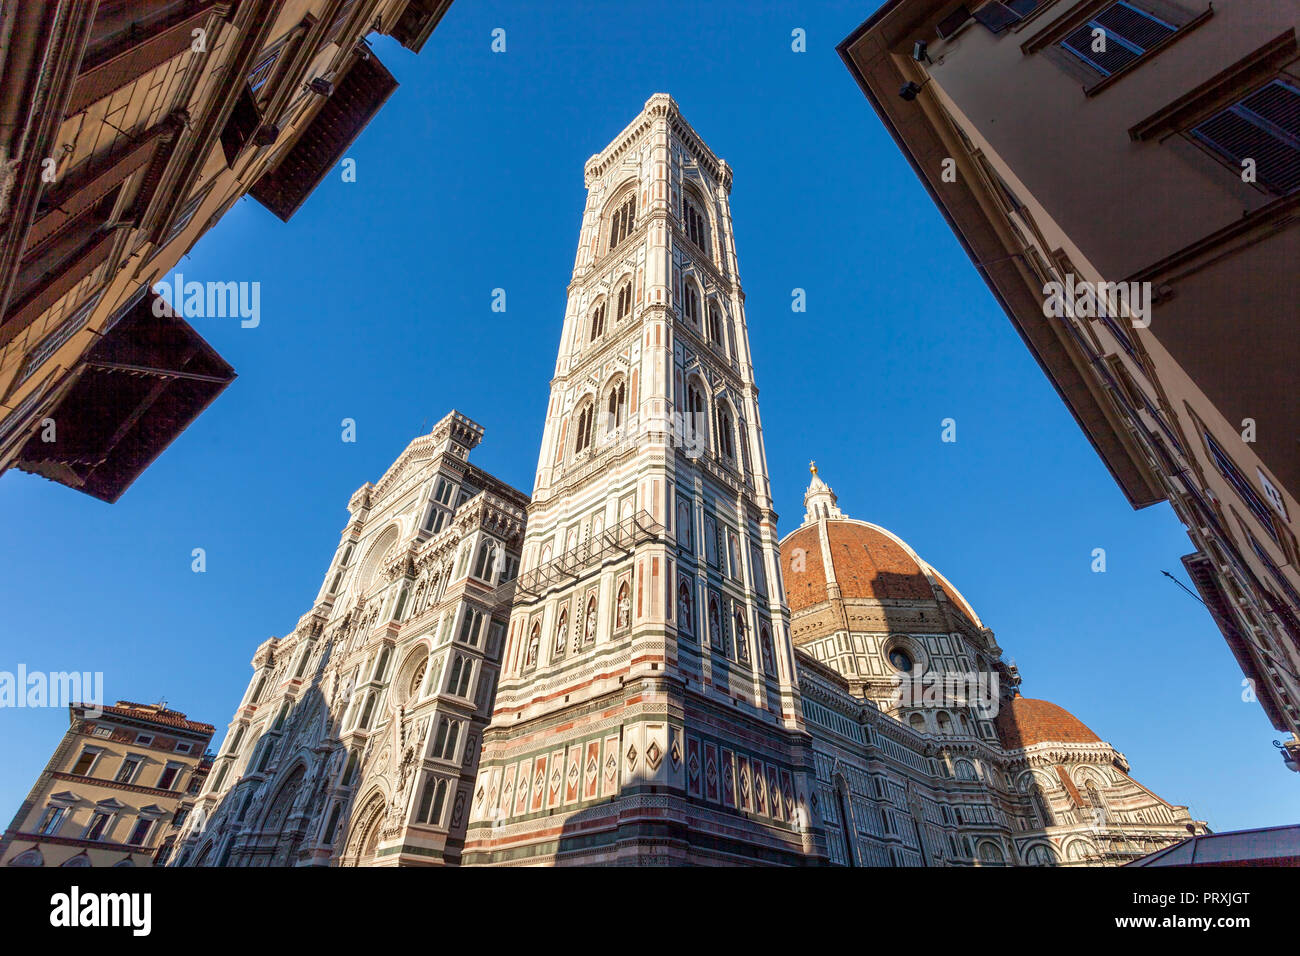 Duomo di Firenze - Cattedrale di Santa Maria del Fiore, Florence, Toscane, Italie Banque D'Images